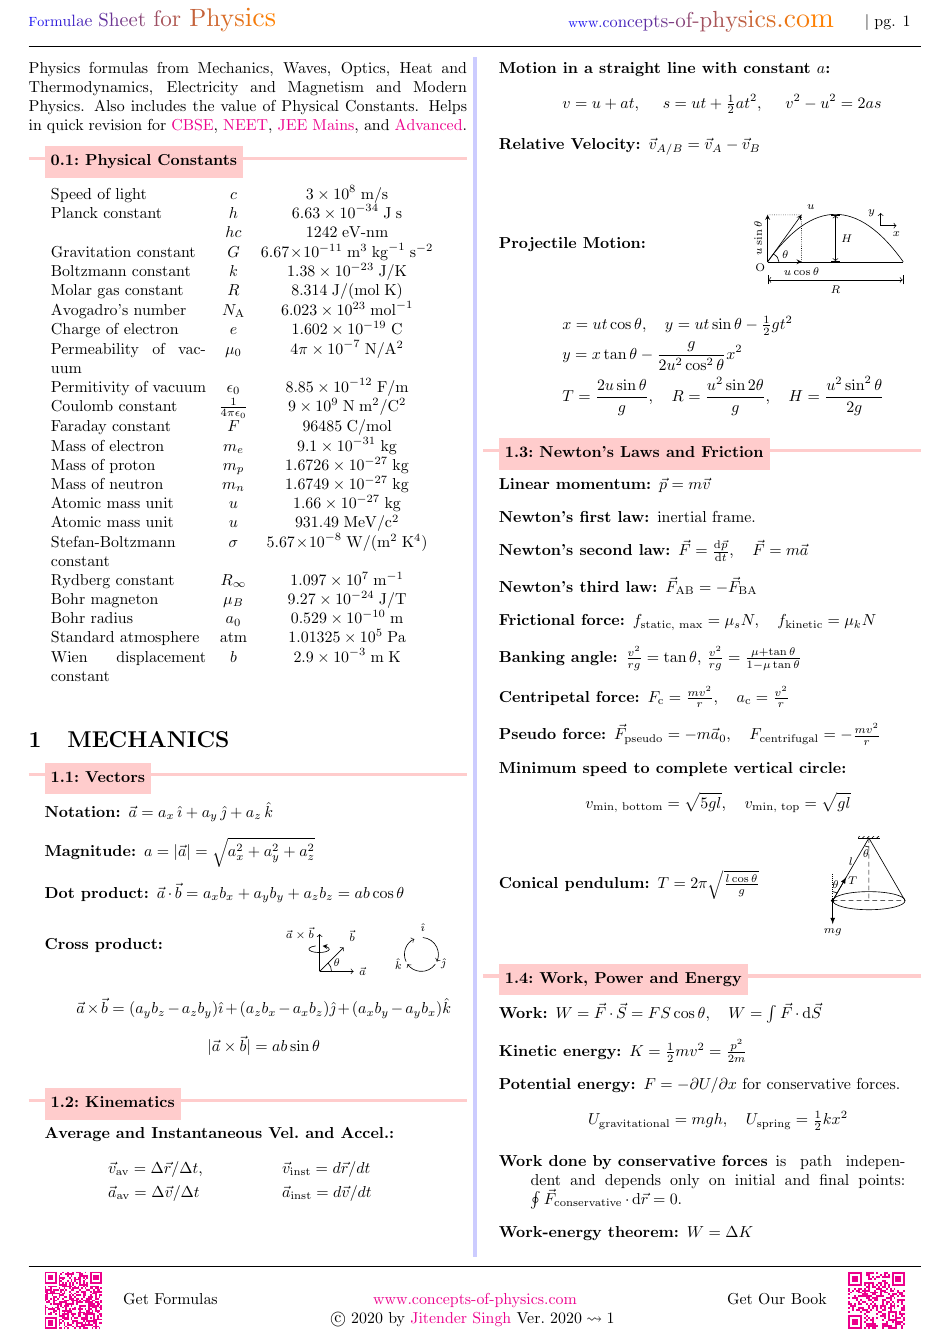 Physics Formula Sheet - Preview Image